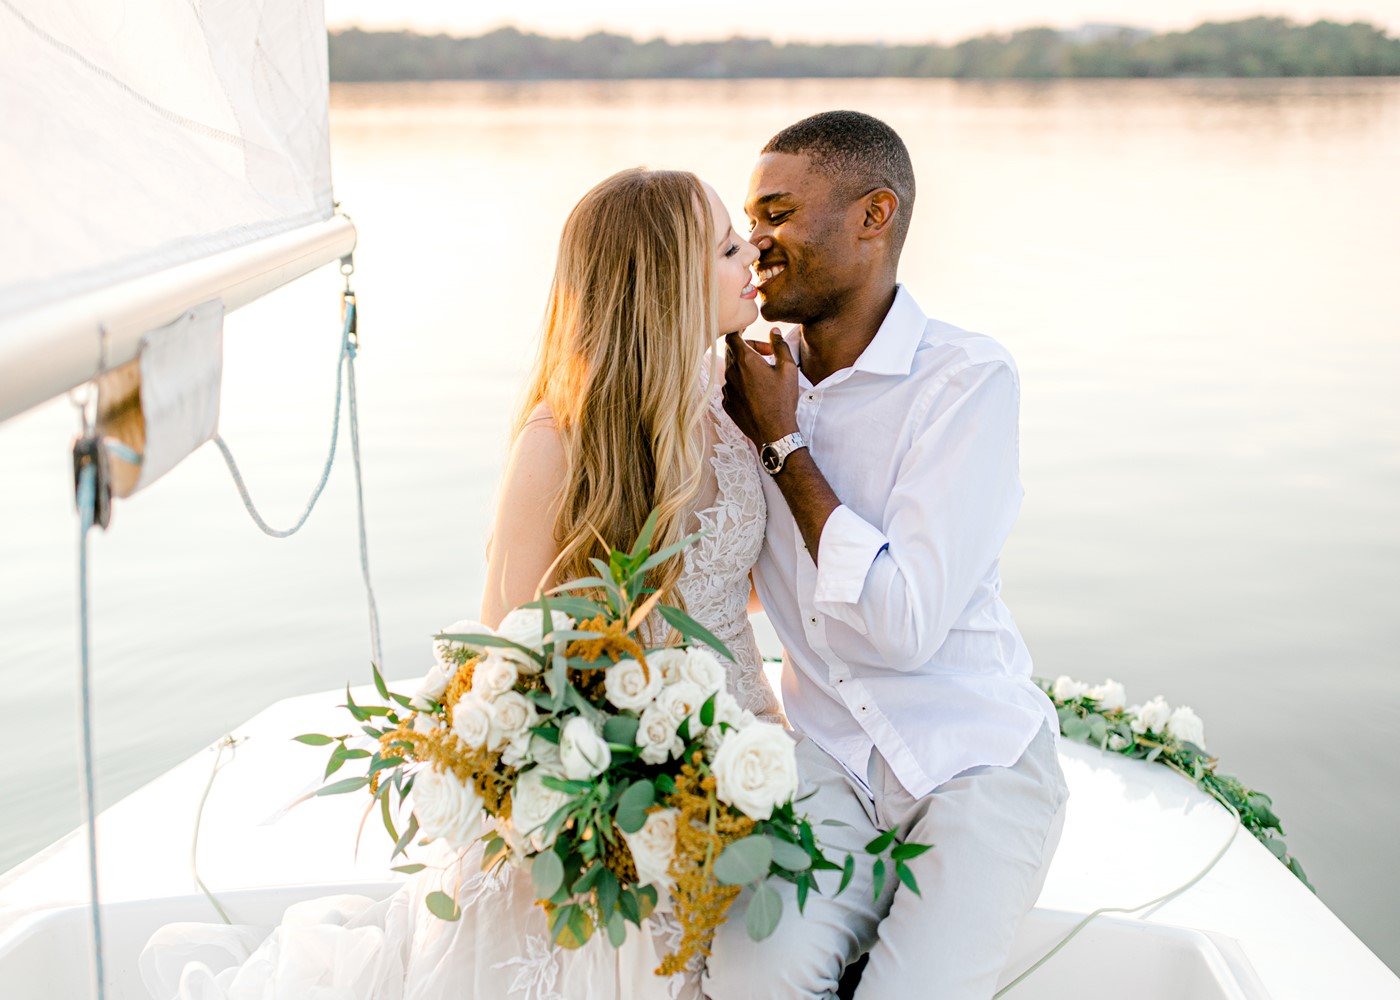 Main Picture: Romantic Texas Sailboat Wedding Inspiration